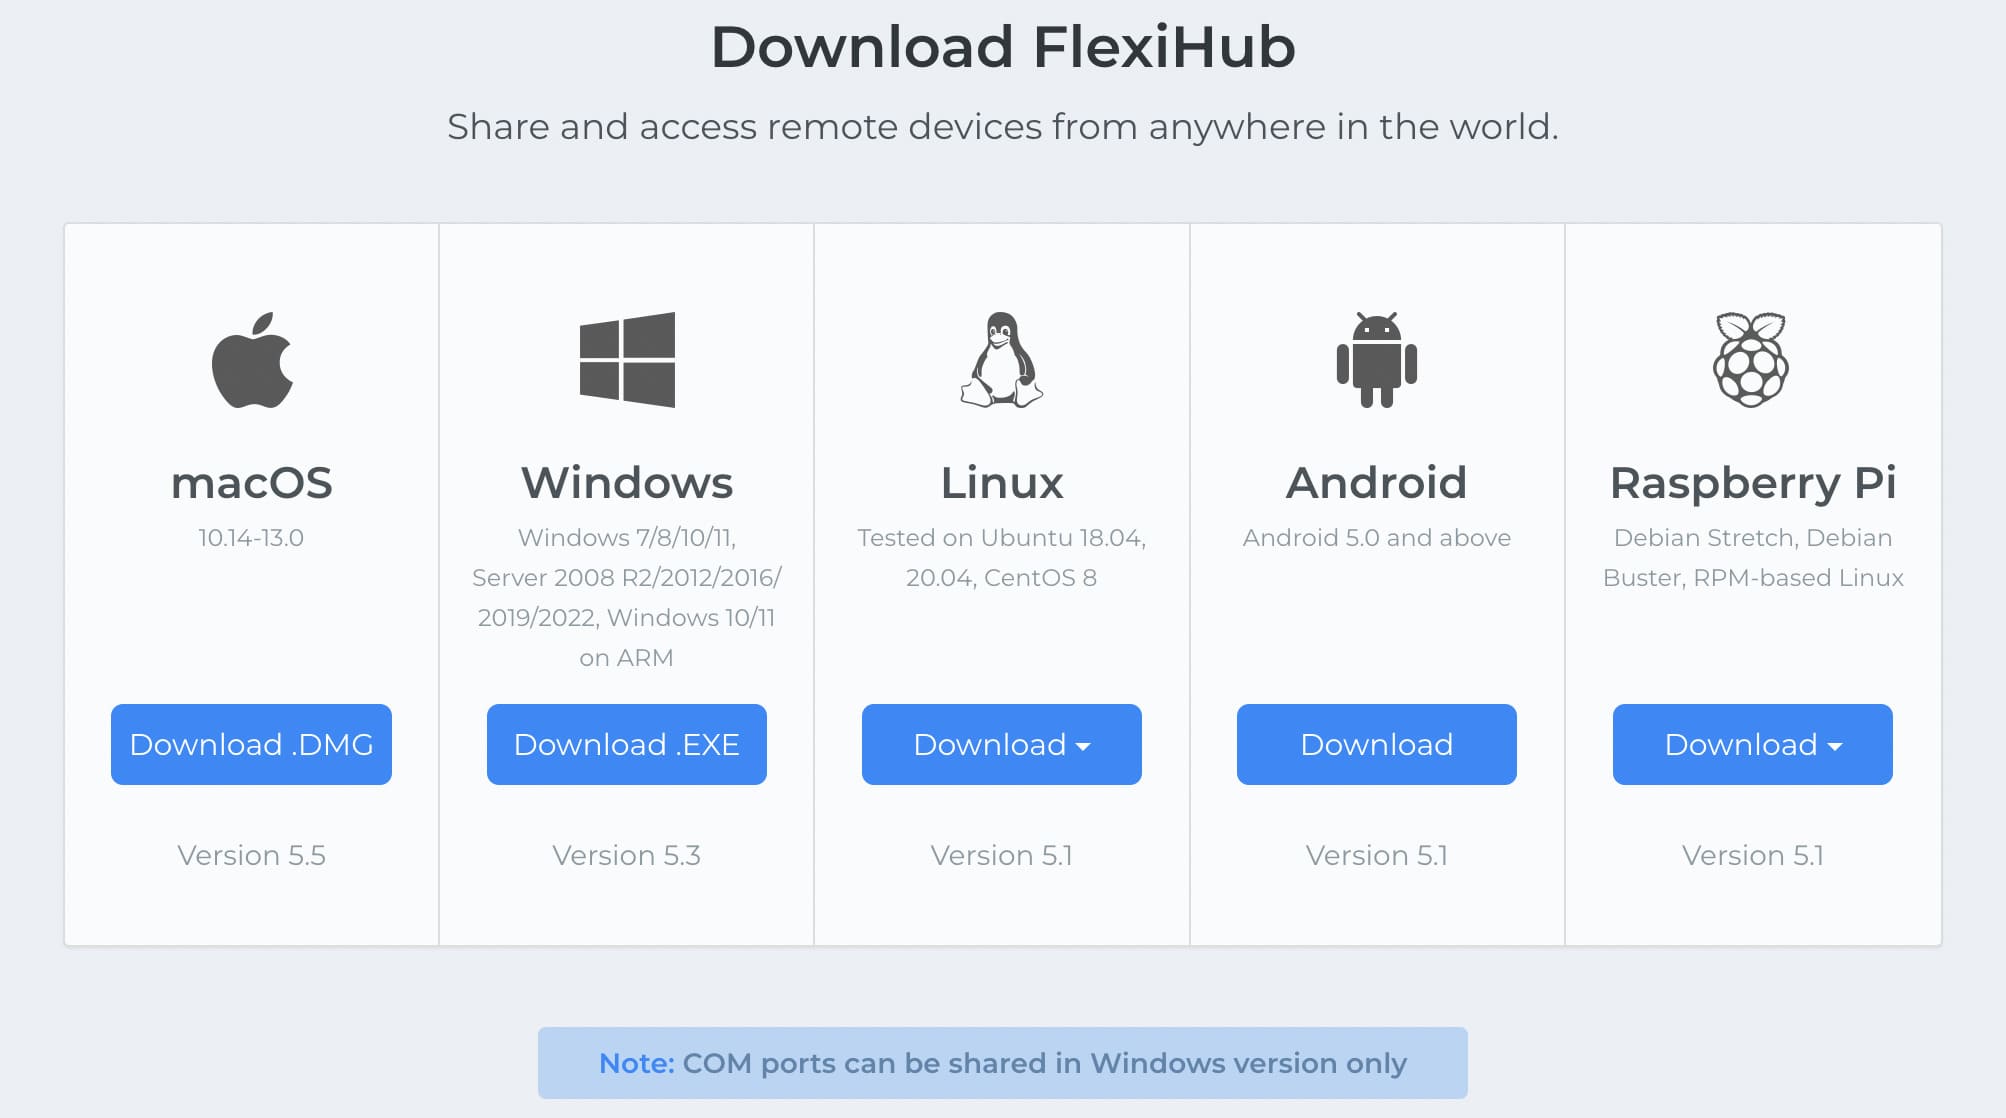  flexihub download